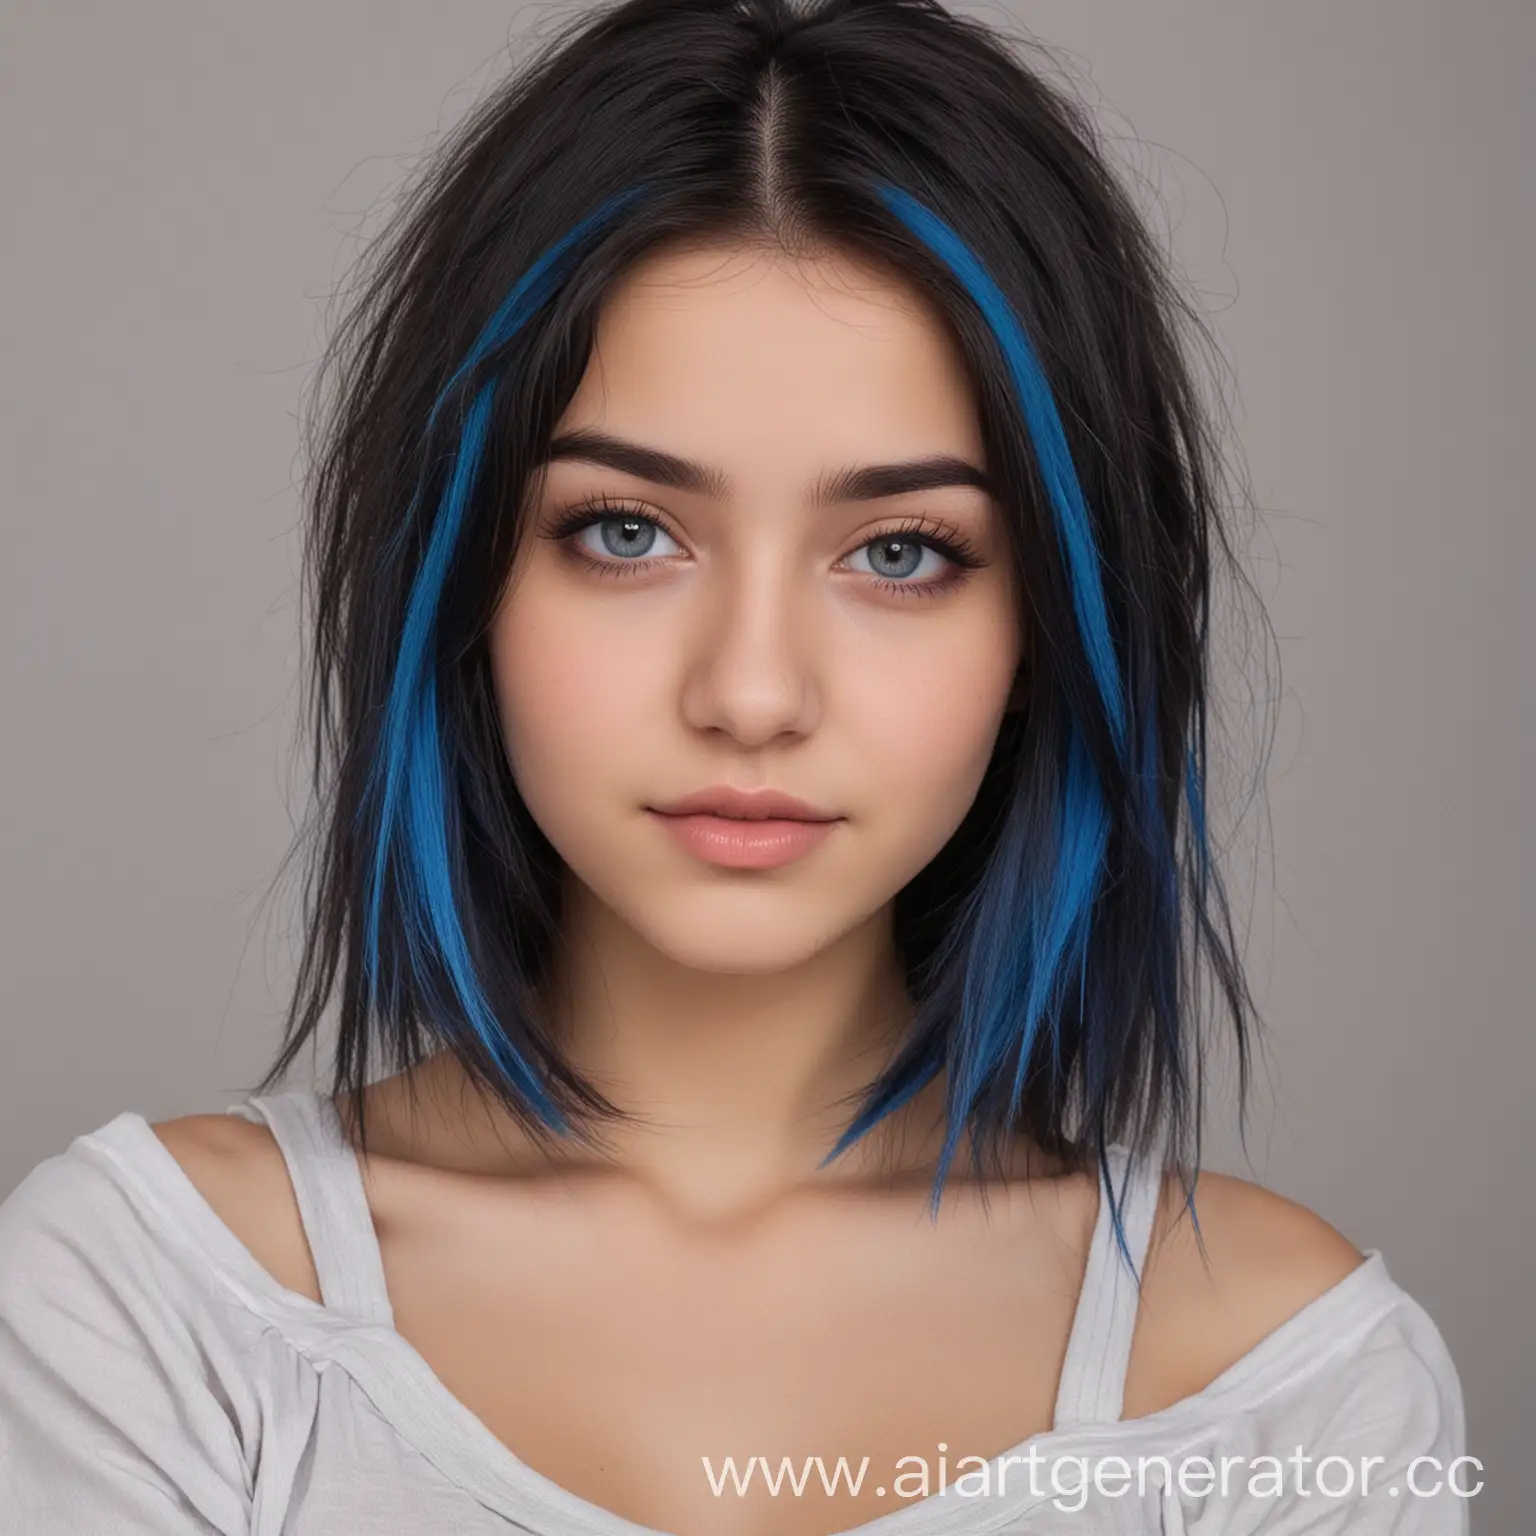 Teenage-Girl-with-ShoulderLength-Dark-Hair-and-Blue-Highlights